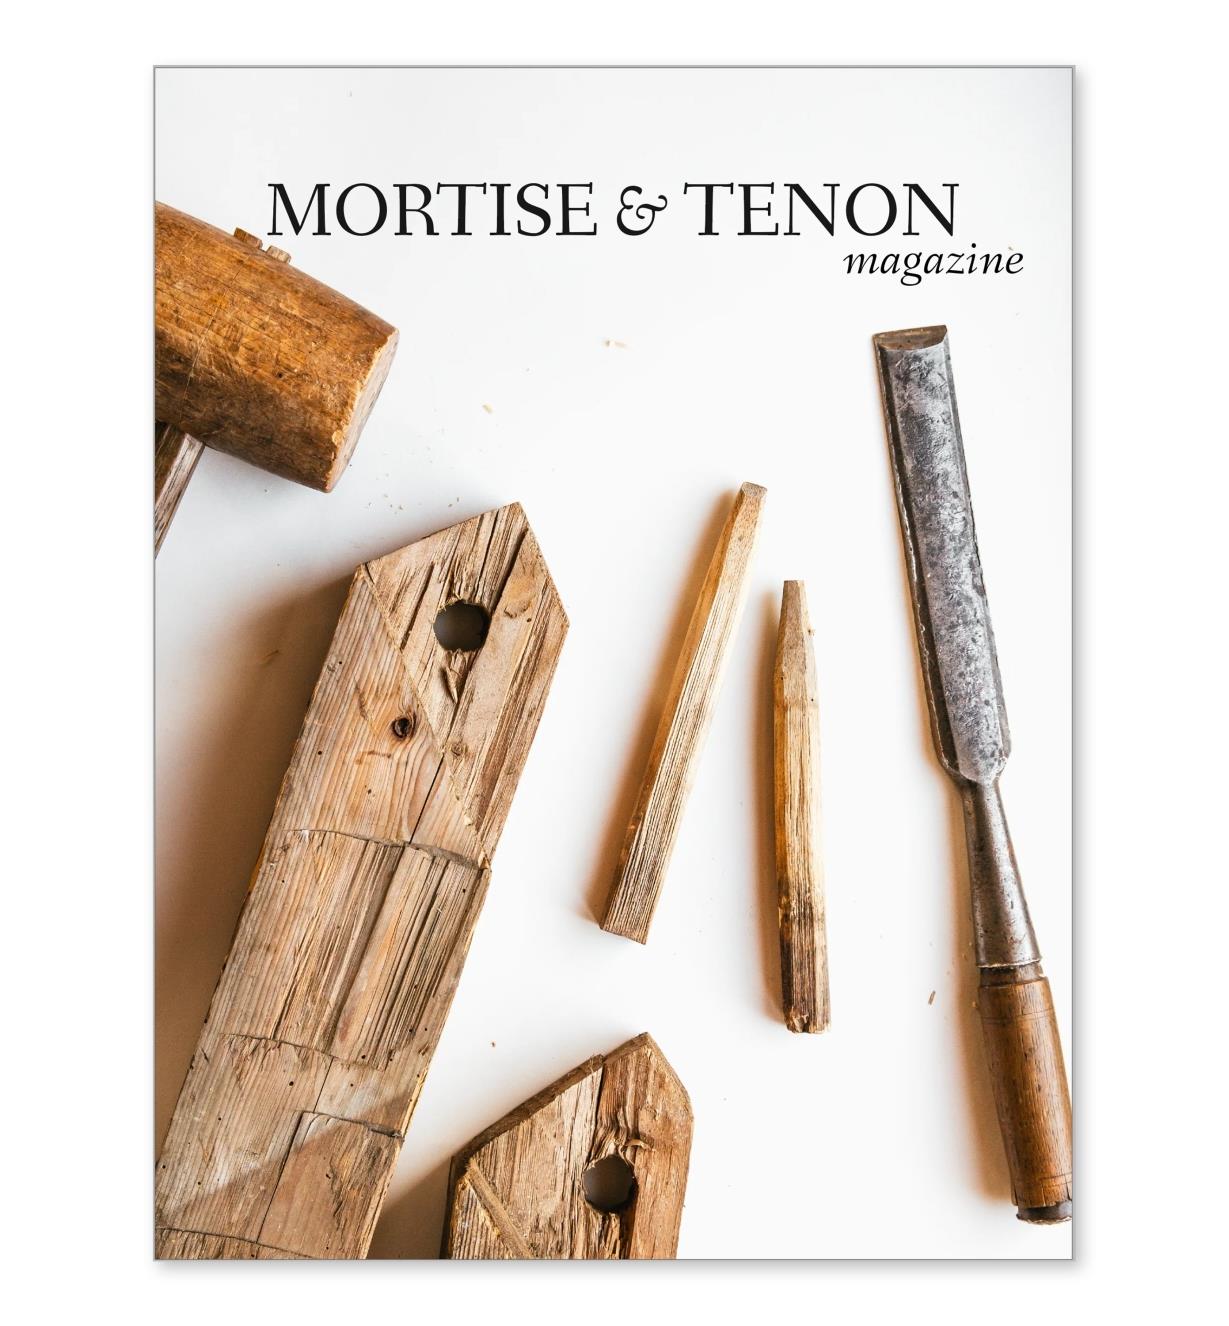 42L9524 - Mortise & Tenon Magazine, Issue 14